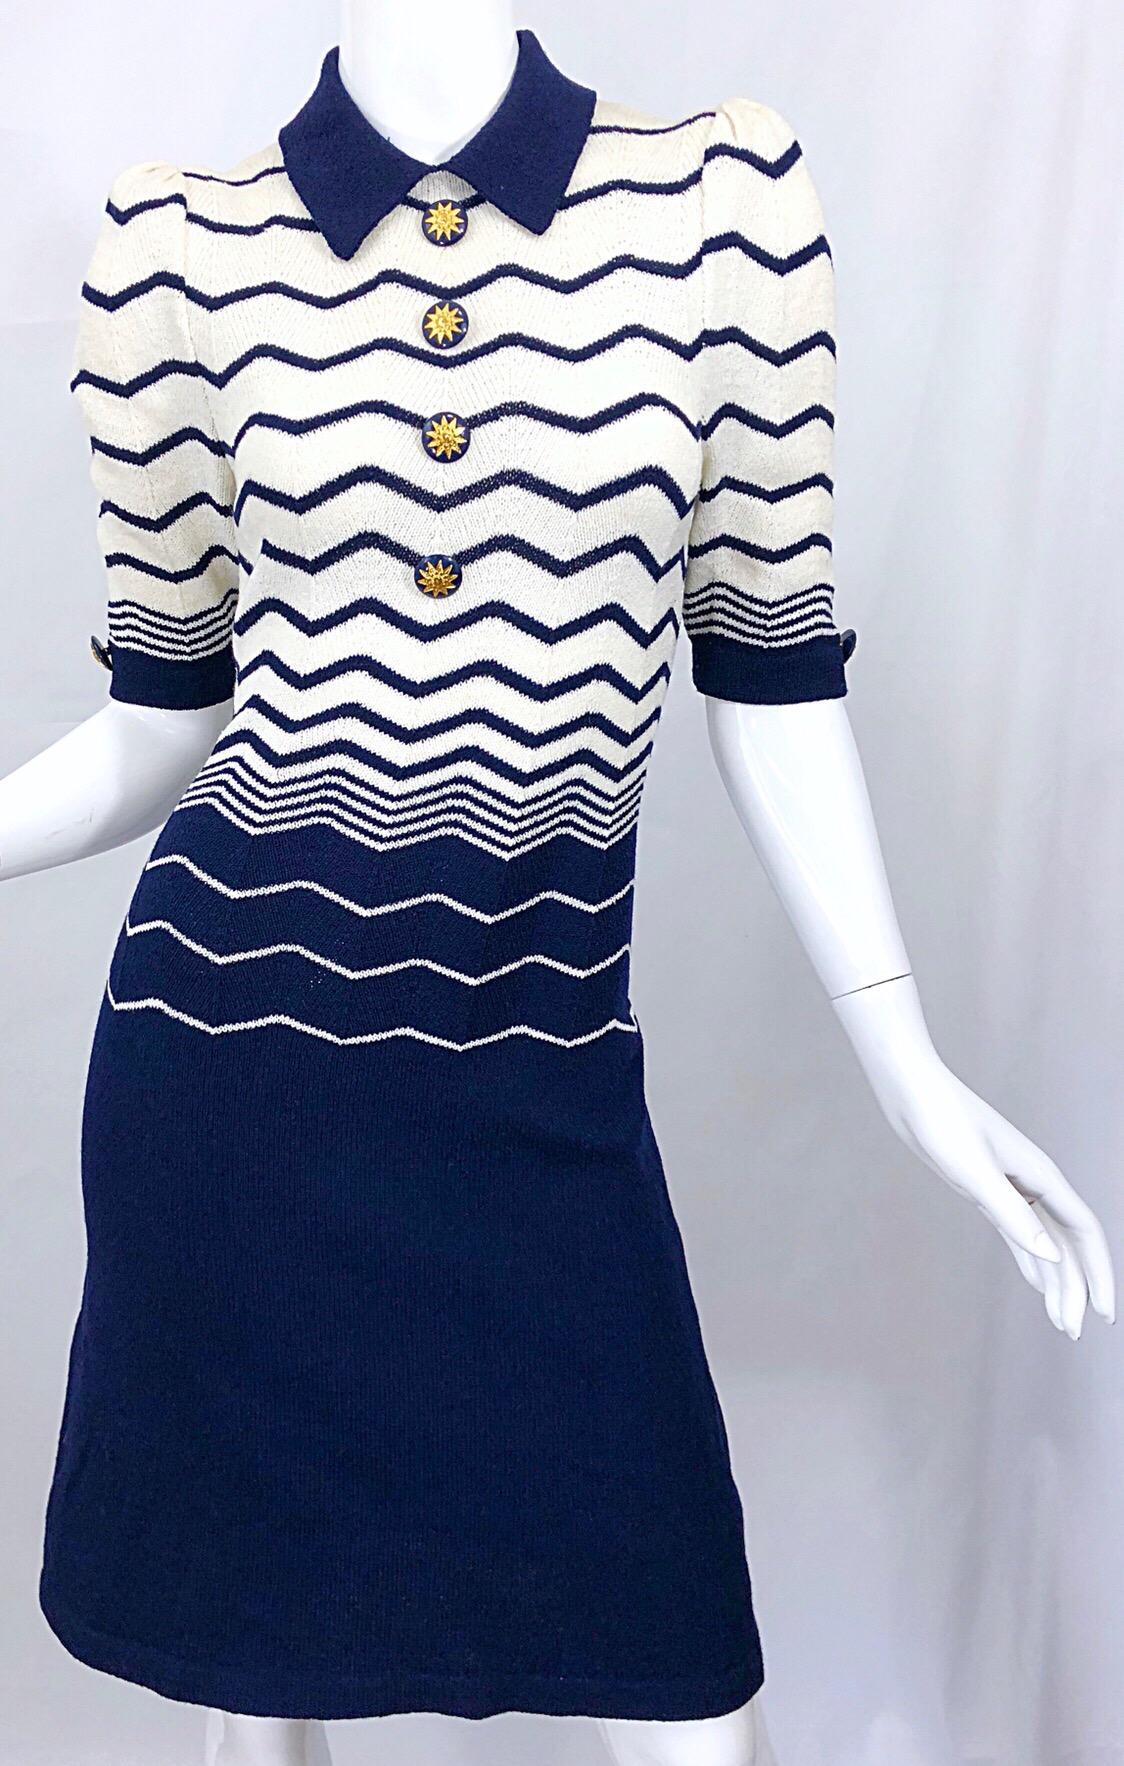 Chic Vintage 1980s Adolfo Navy Blue White Zig Zag Print Short Sleeve Knit Dress  For Sale 1